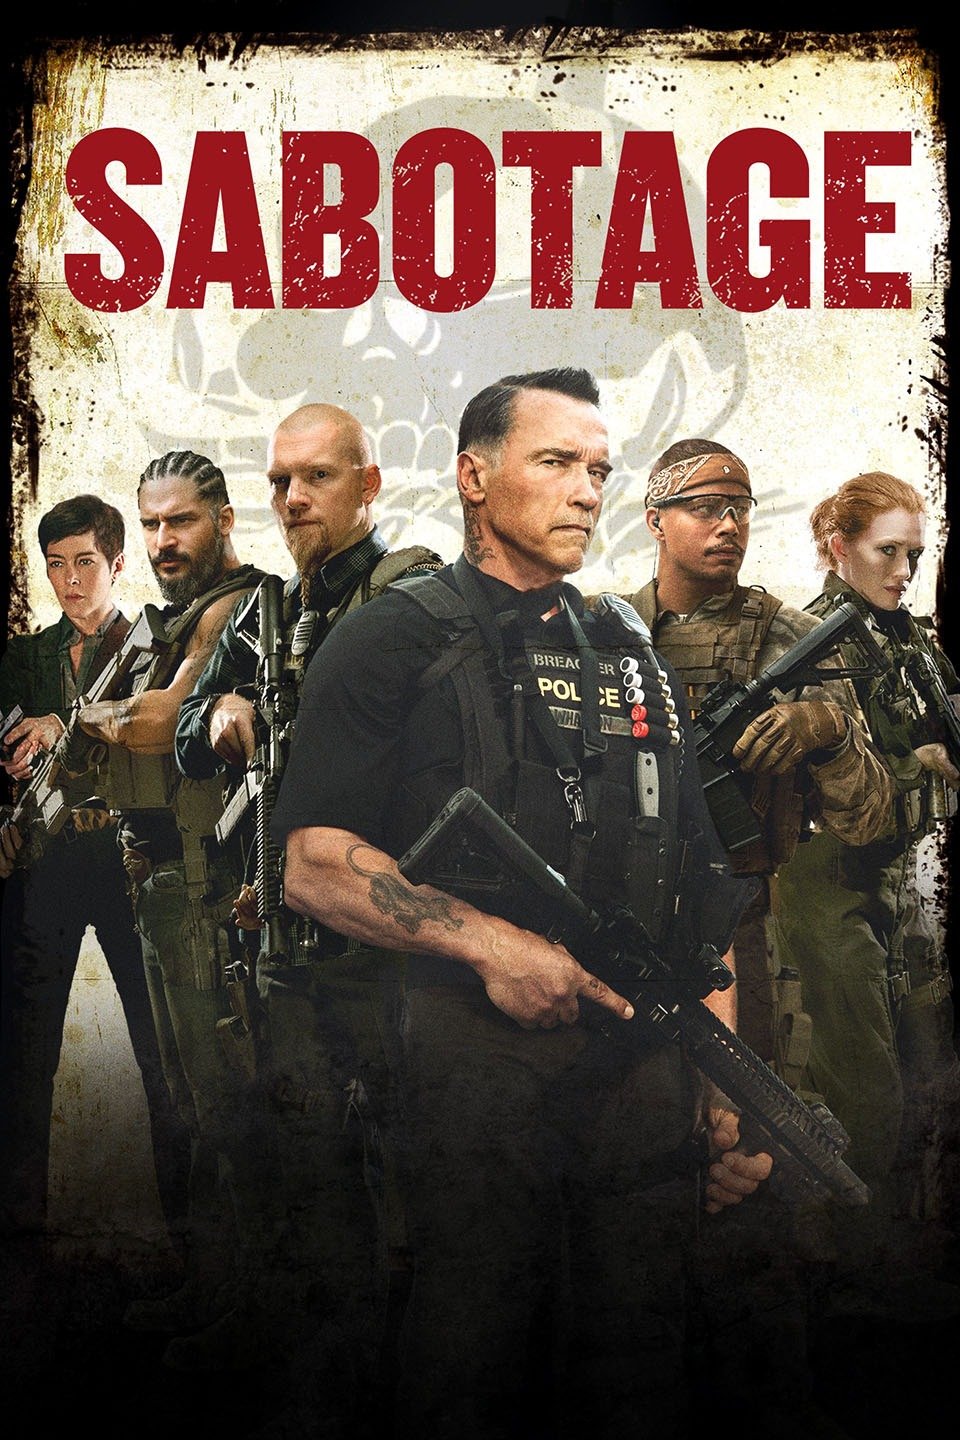 [NINI-HD] Sabotage (2014) คนเหล็กล่านรก [1080p] [เสียงไทย DTS + อังกฤษ DTS] [DTS.x264] [บรรยายไทย + อังกฤษ] [ซับไทย + เสียงไทย] [ONE2UP]